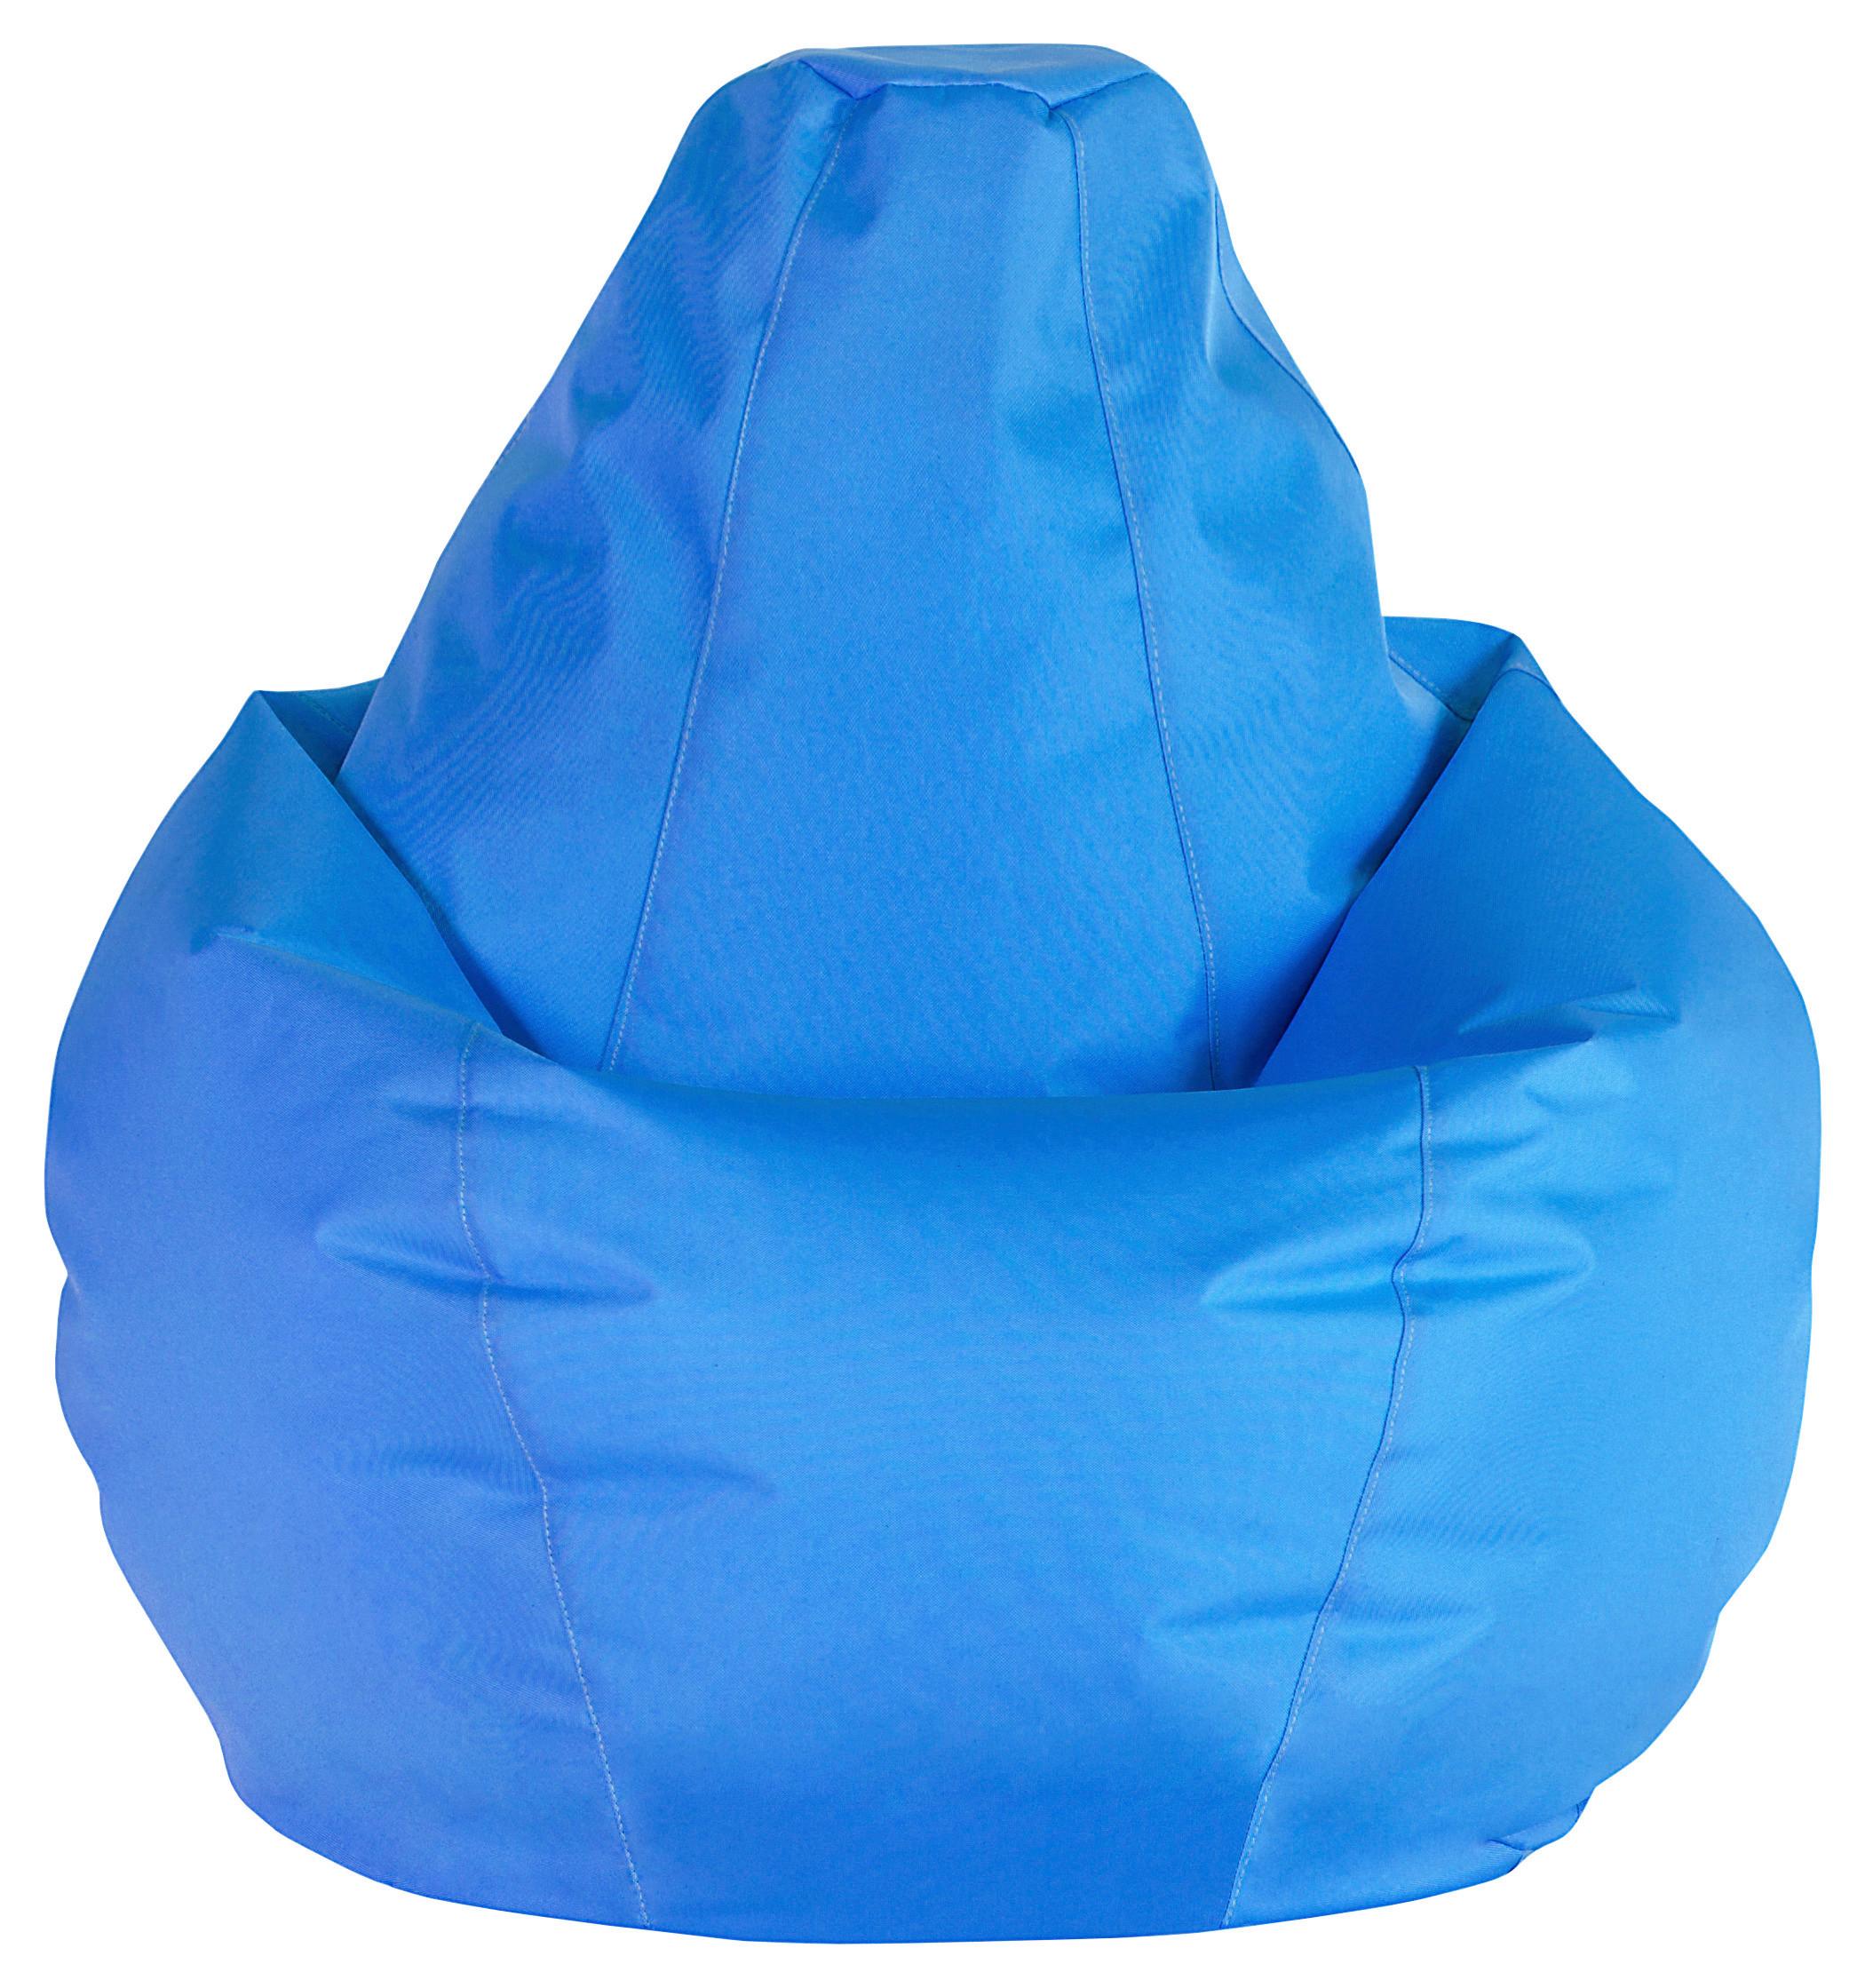 Vreća Za Sjedenje Soft L - plava, Modern, tekstil (120cm) - Based